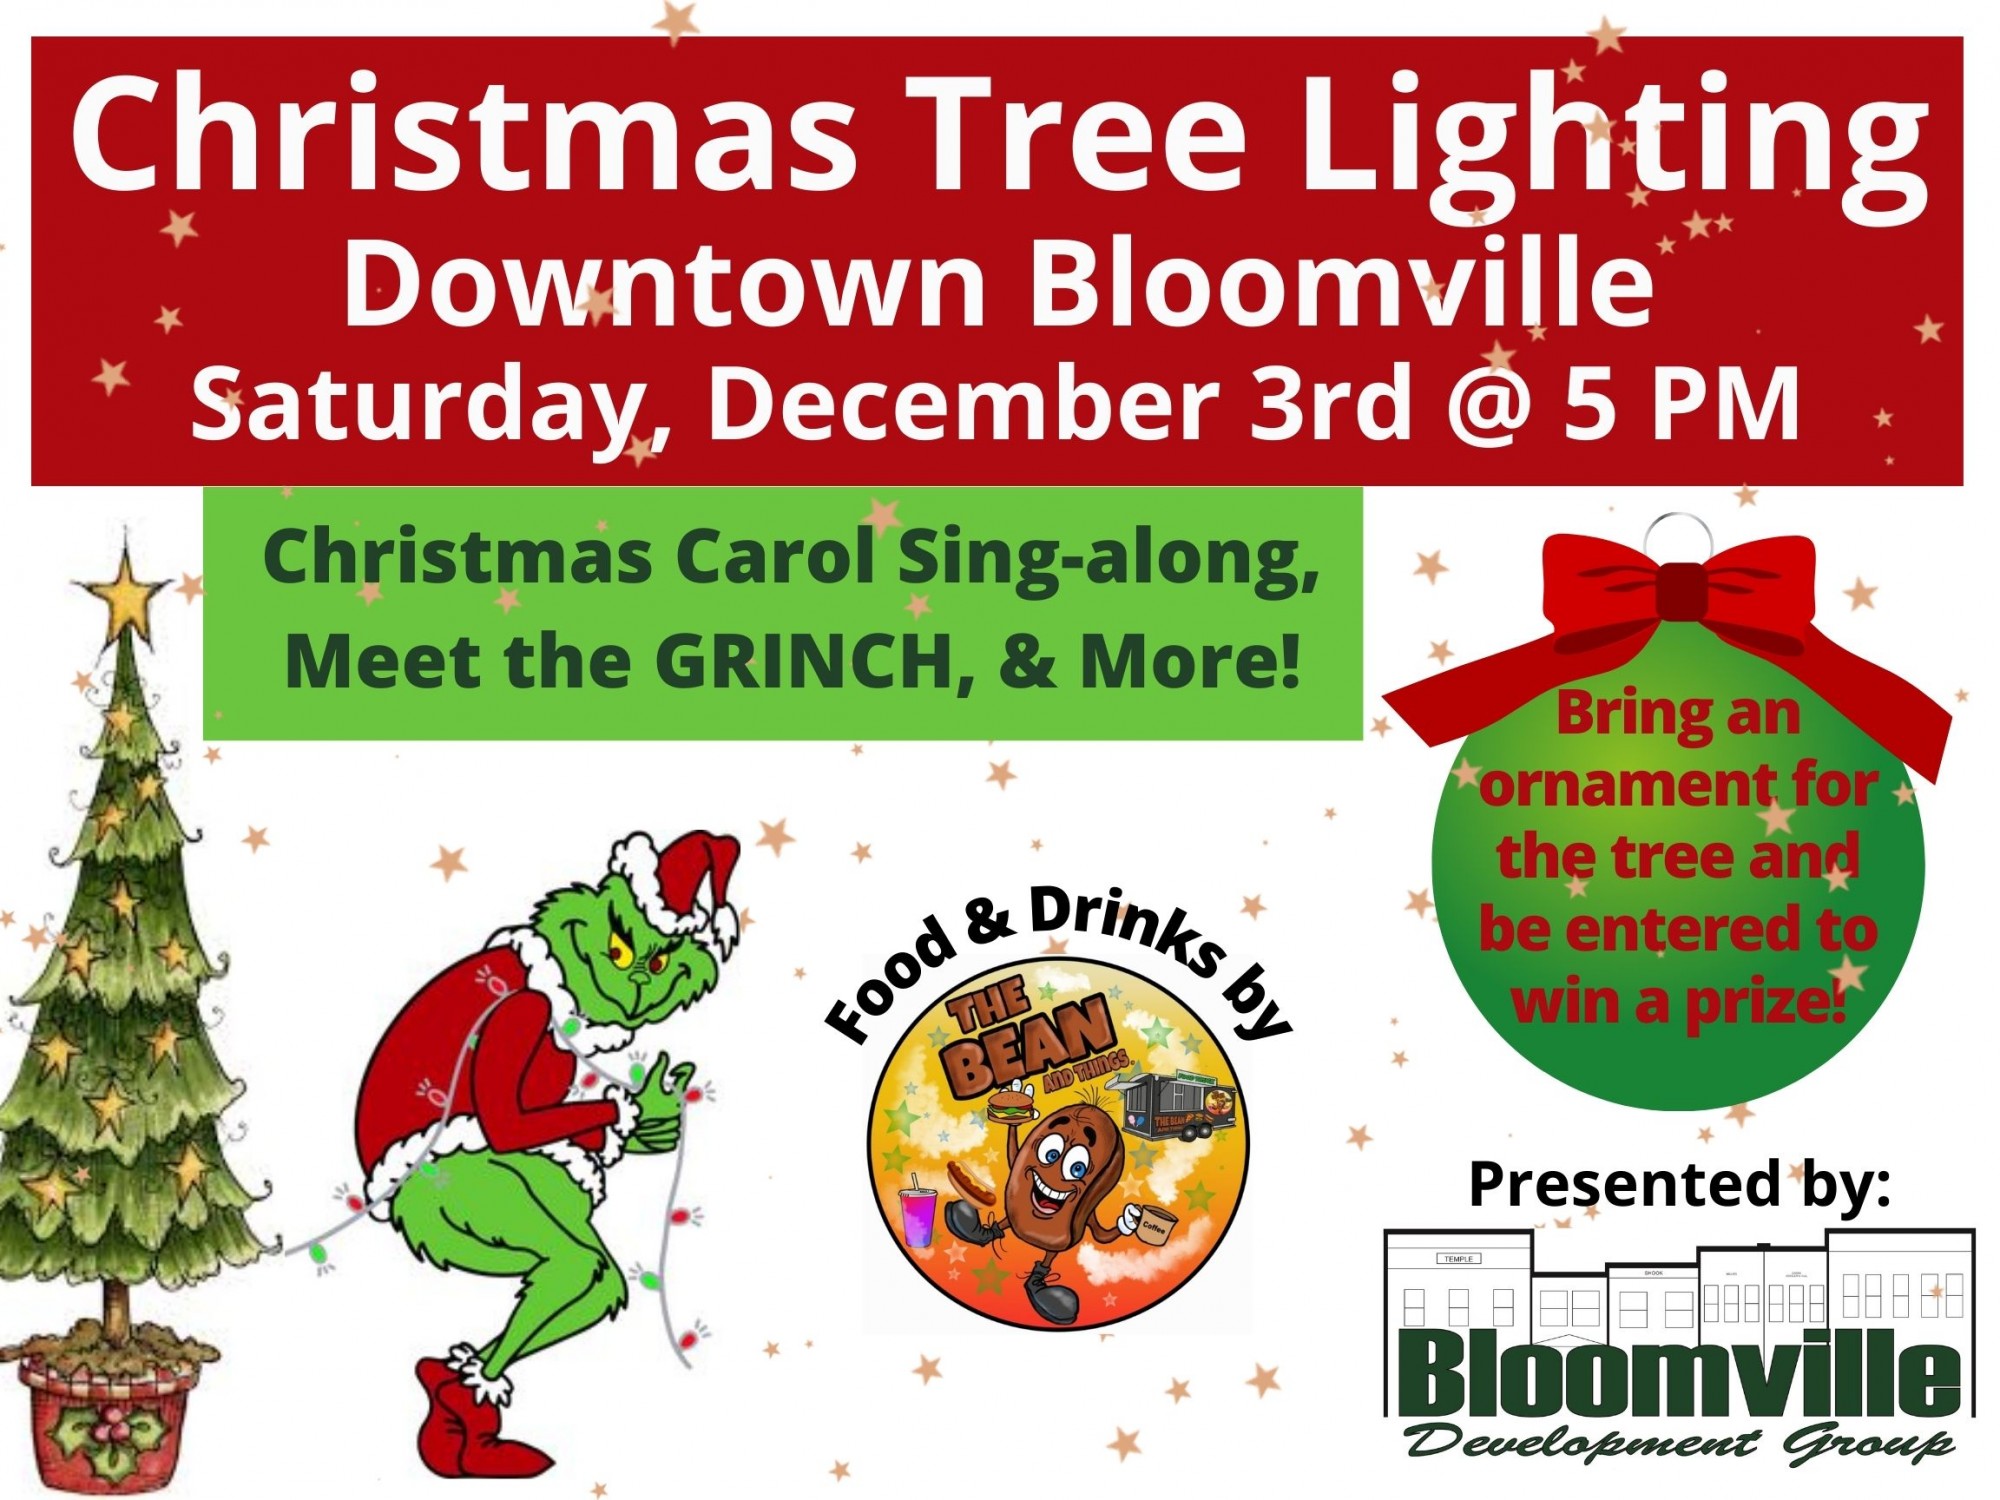 Bloomville Christmas Tree Lighting